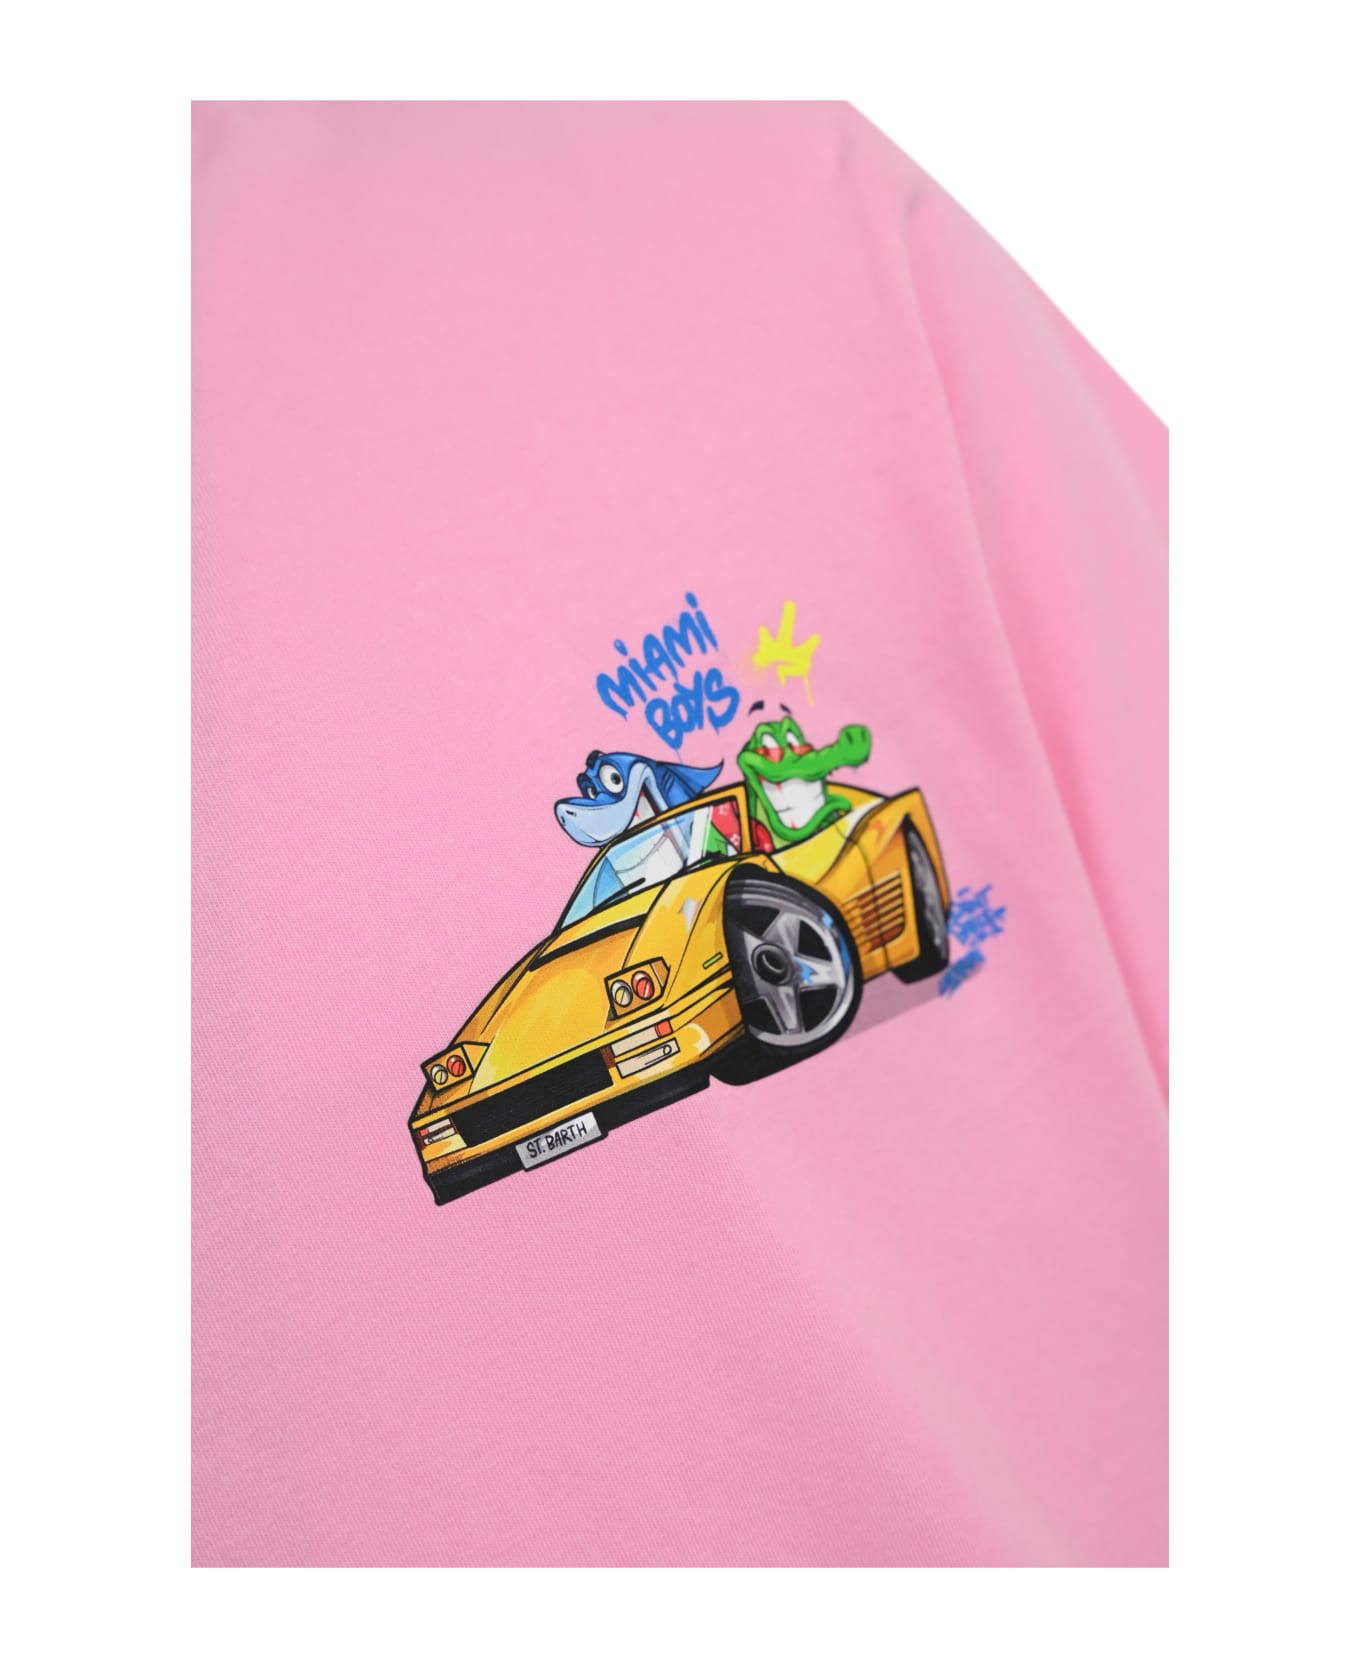 MC2 Saint Barth T-shirt With Miami Boys Print - Rosa シャツ